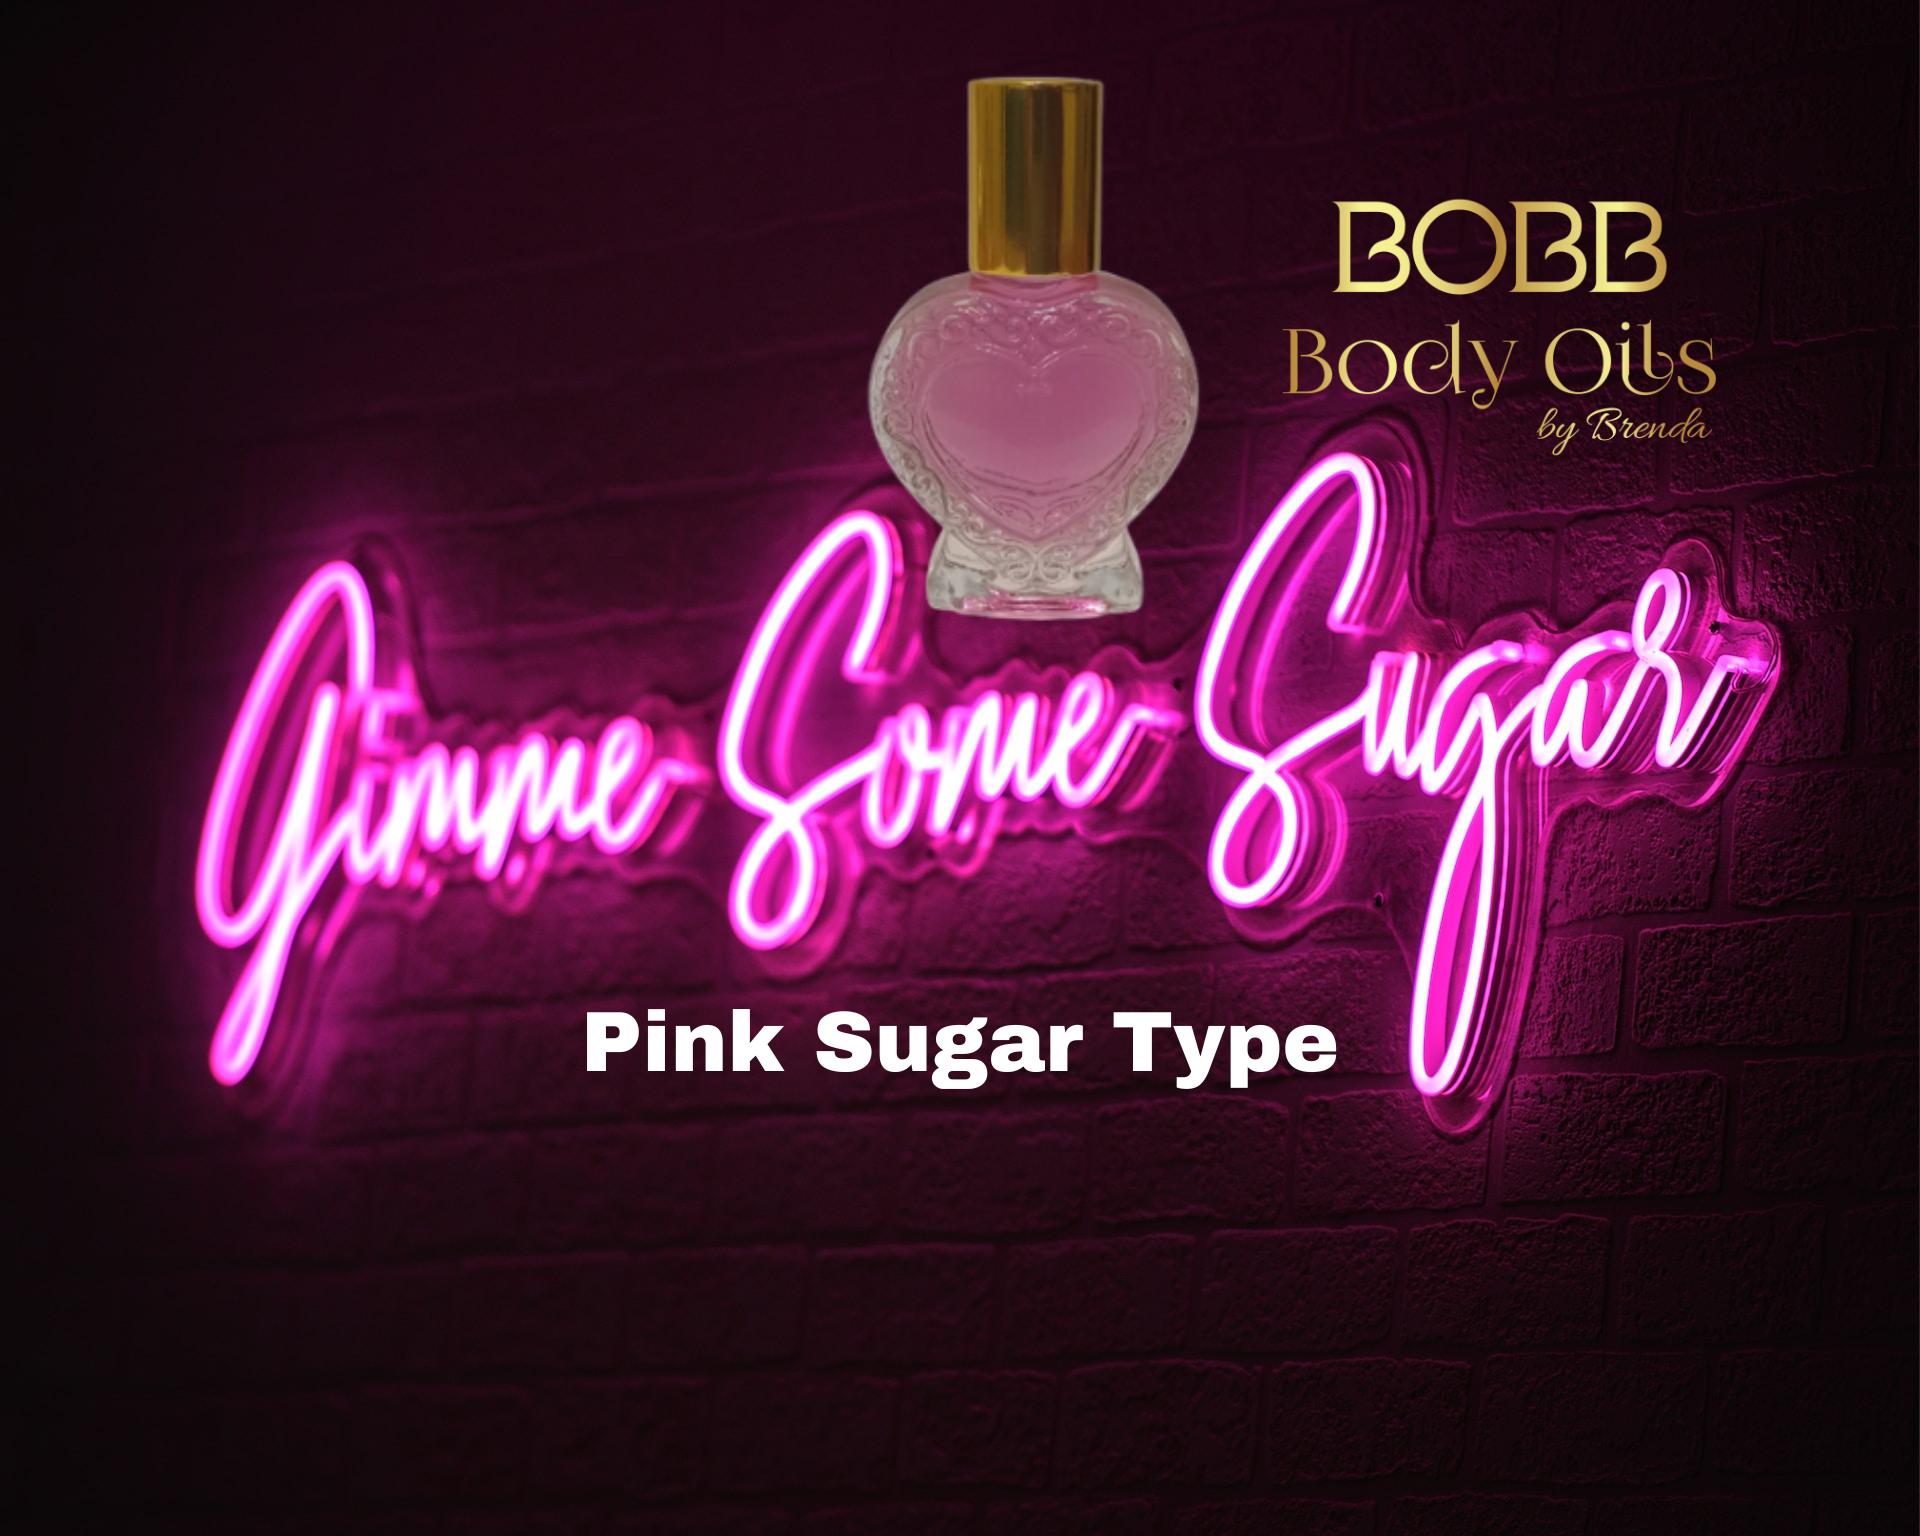 Pink Sugar Fragrance Oil type